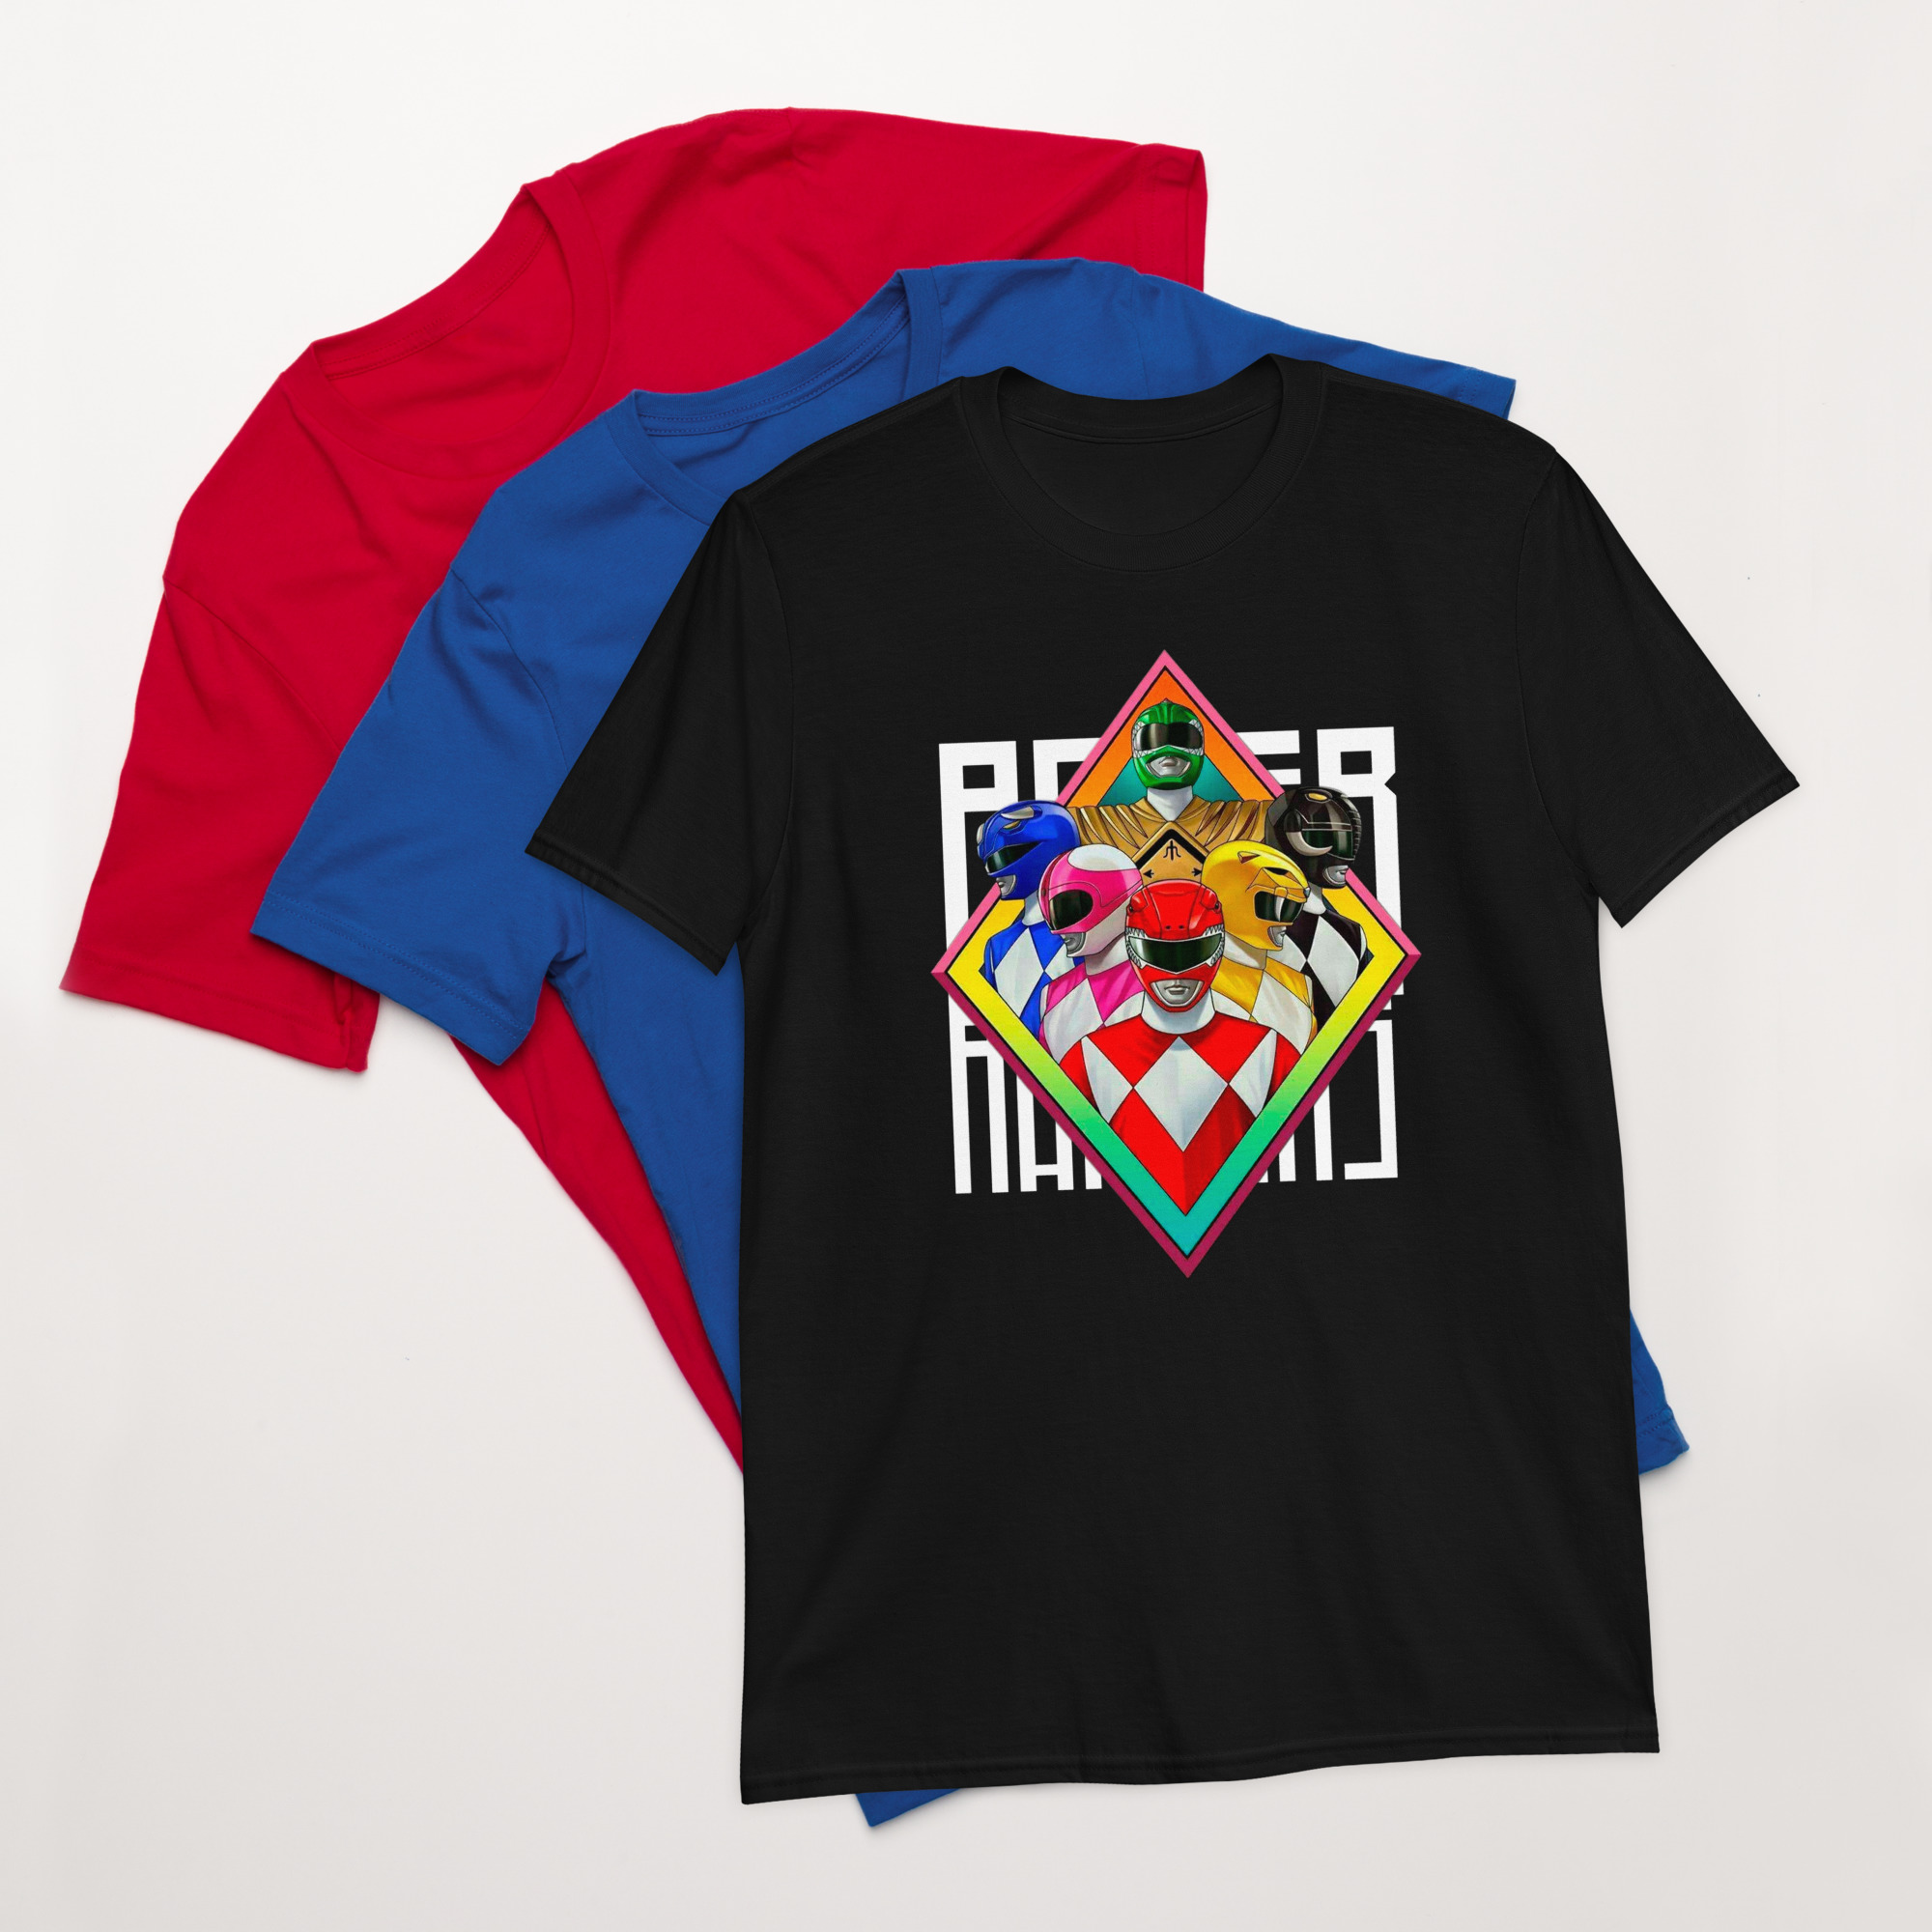 Camiseta Power Rangers - Frente e Verso